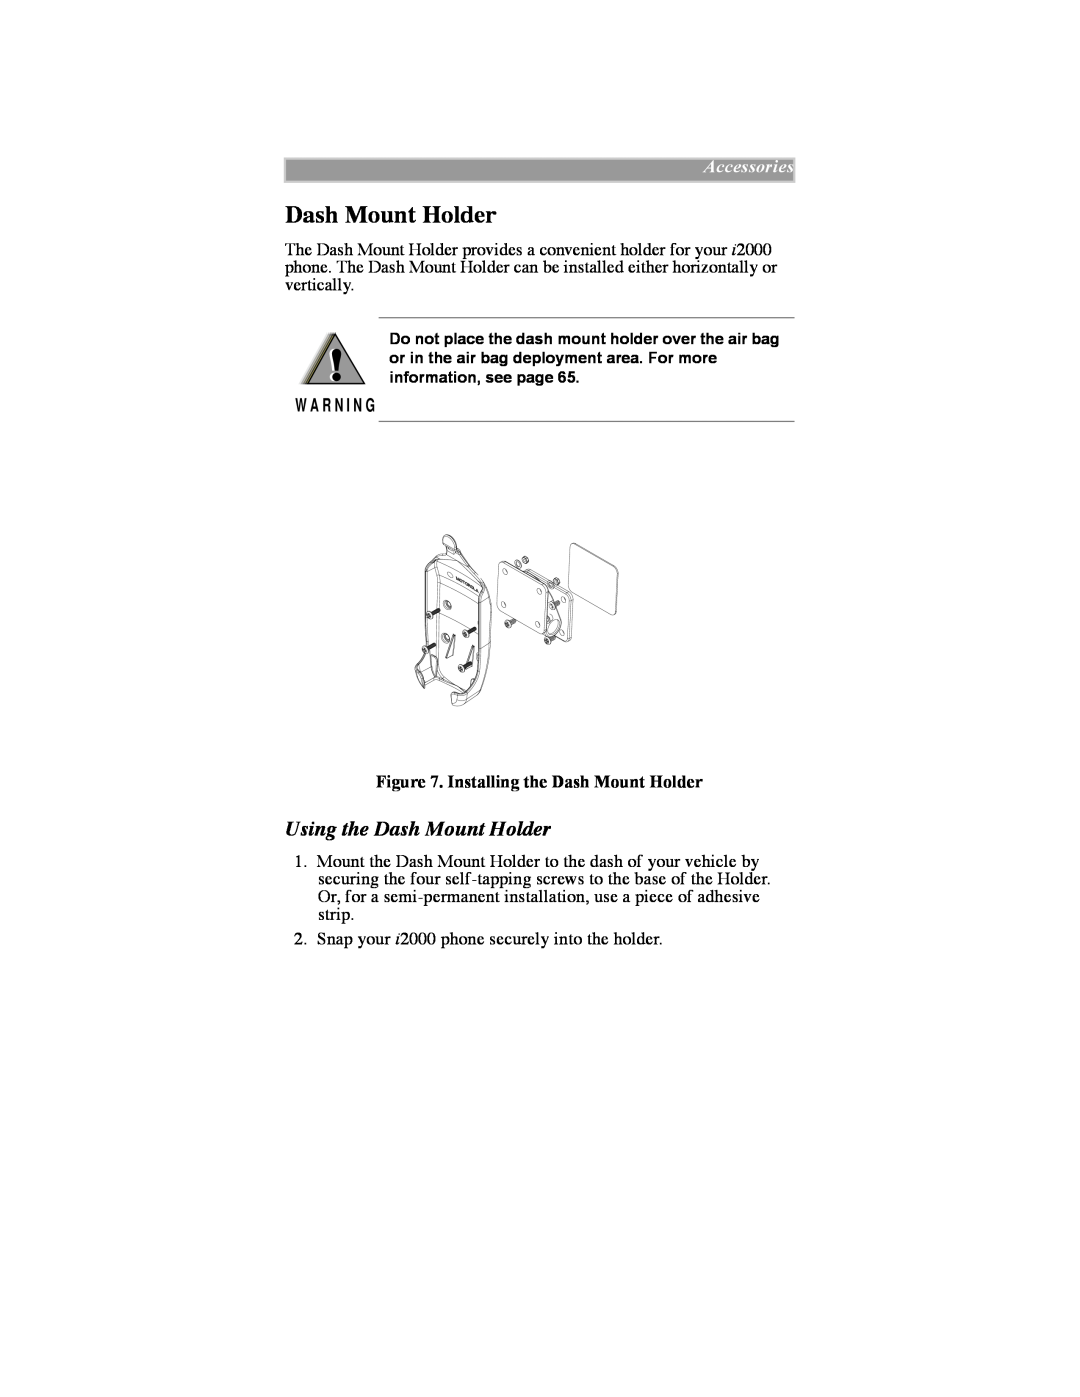 Motorola iDEN manual Using the Dash Mount Holder, Installing the Dash Mount Holder, W A R N I N G, Accessories 